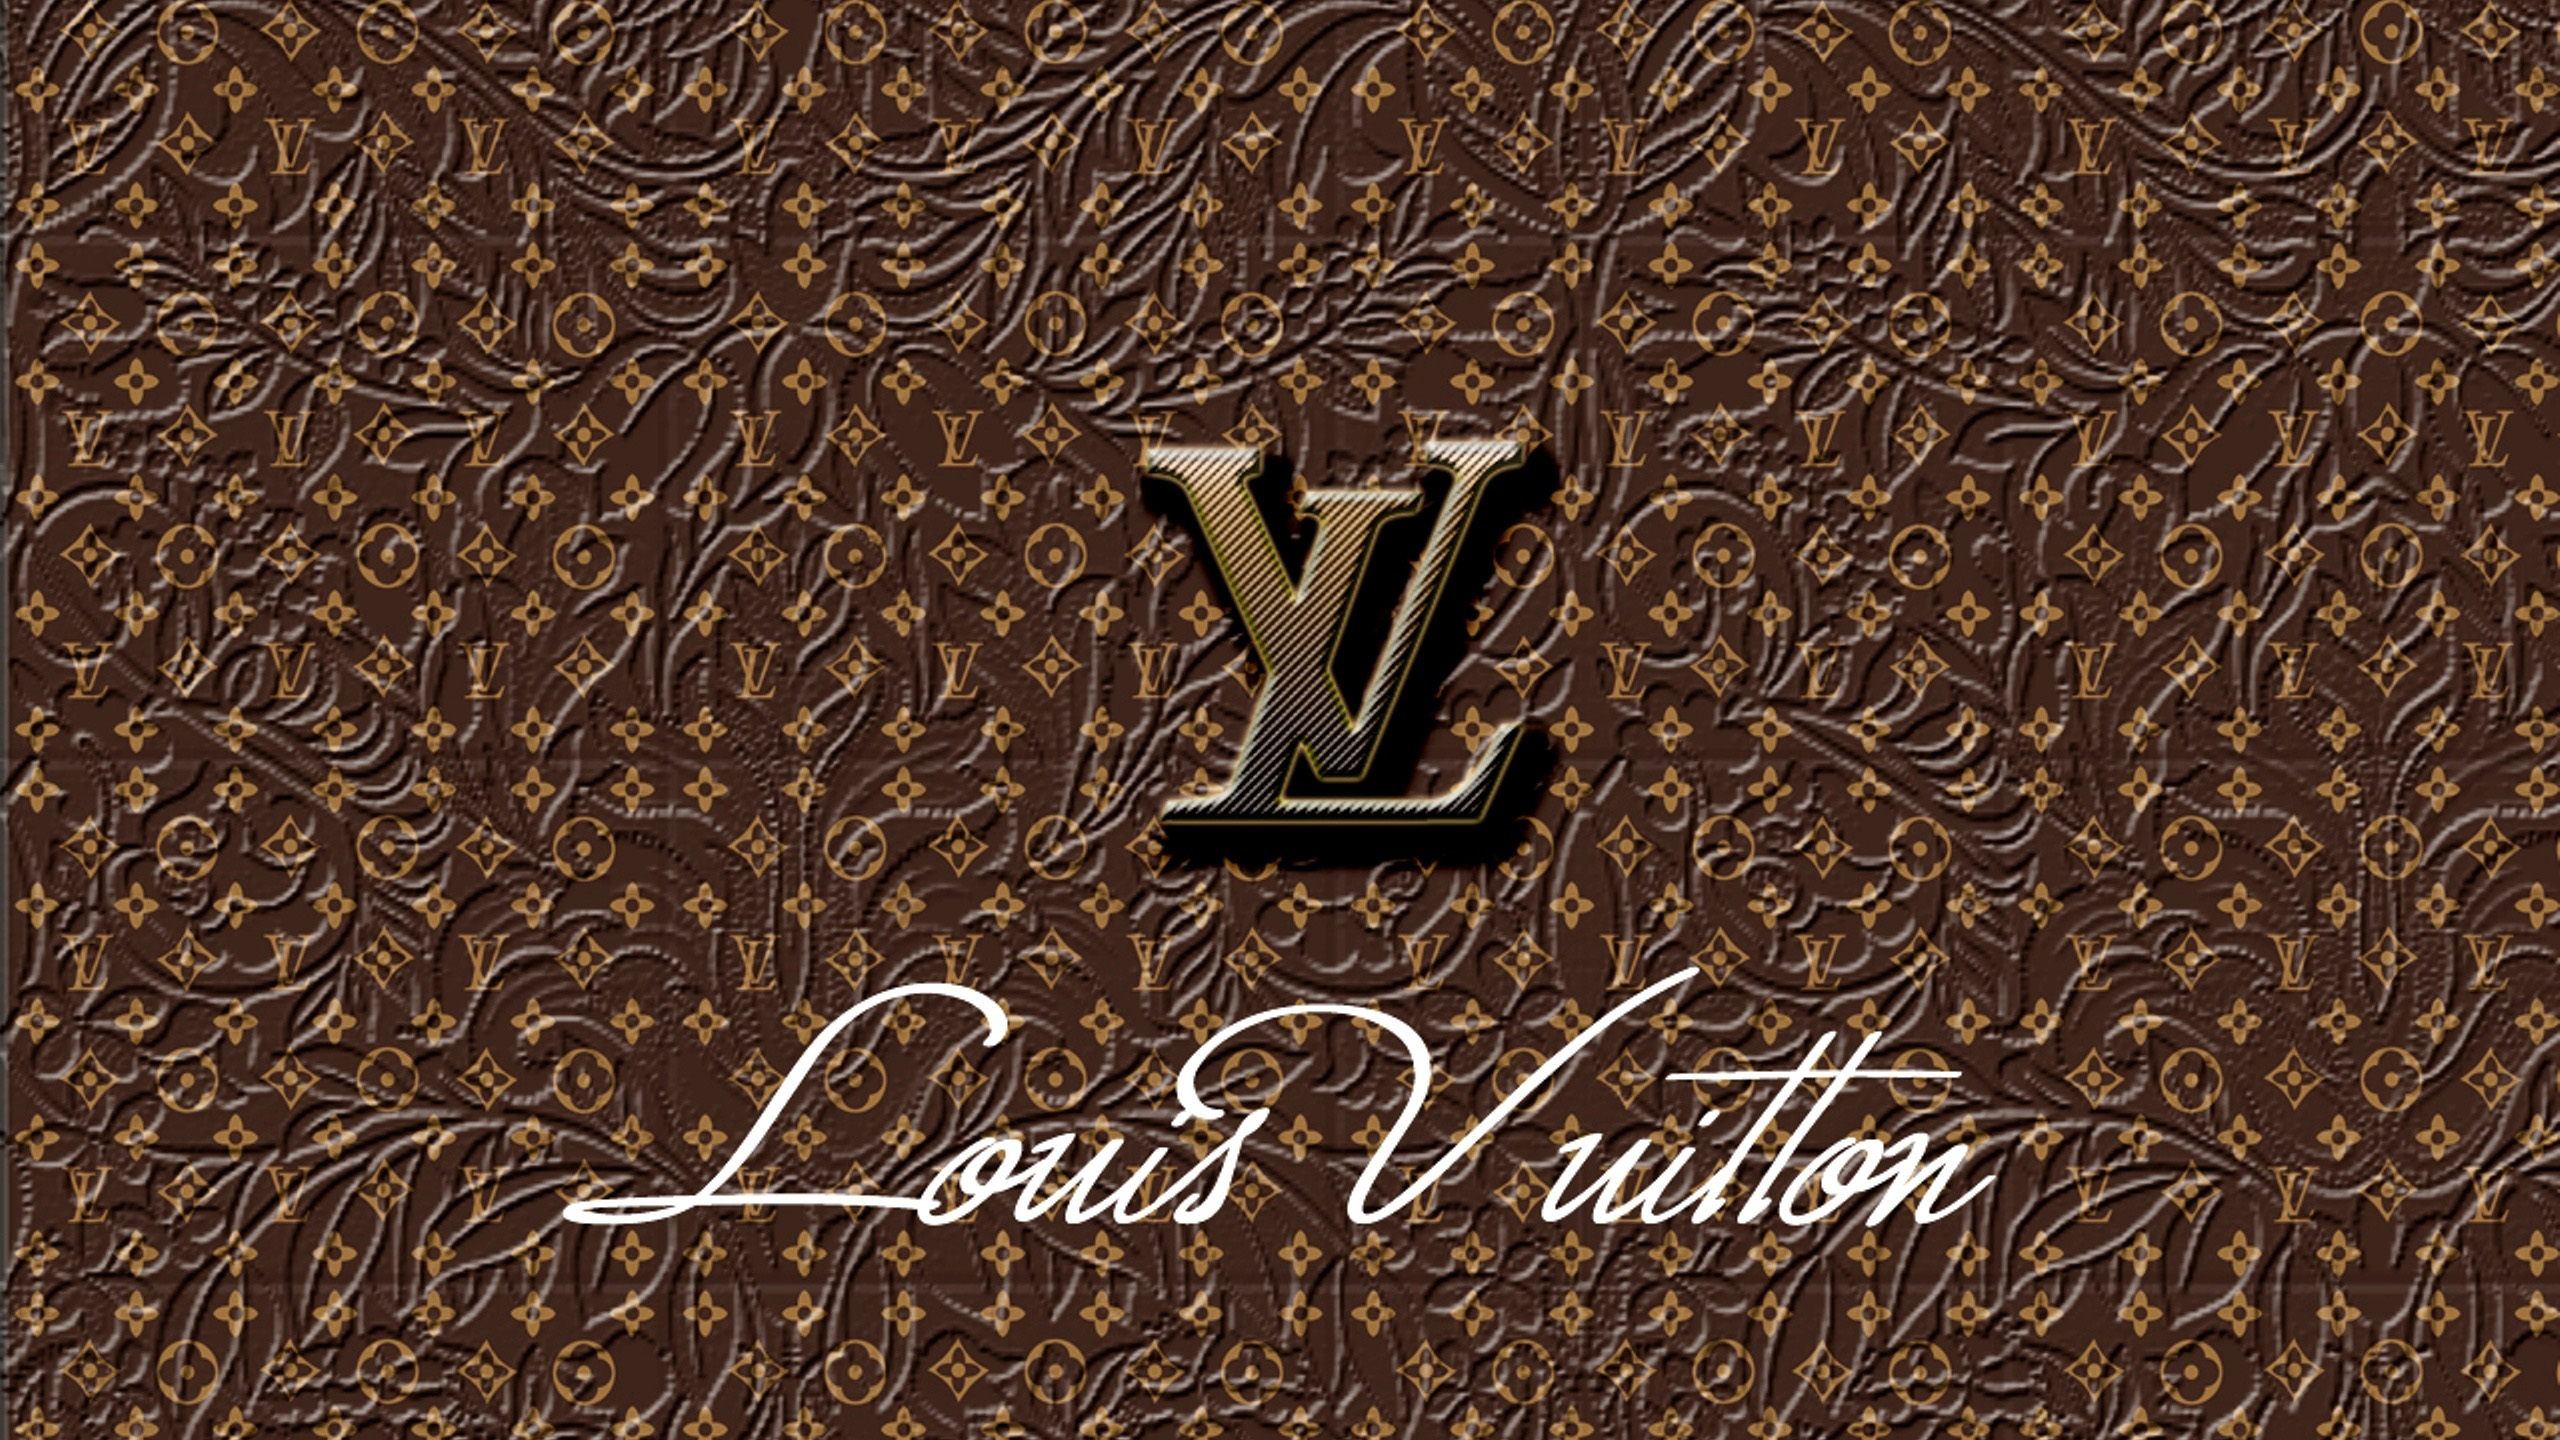 Supreme Louis Vuitton Background